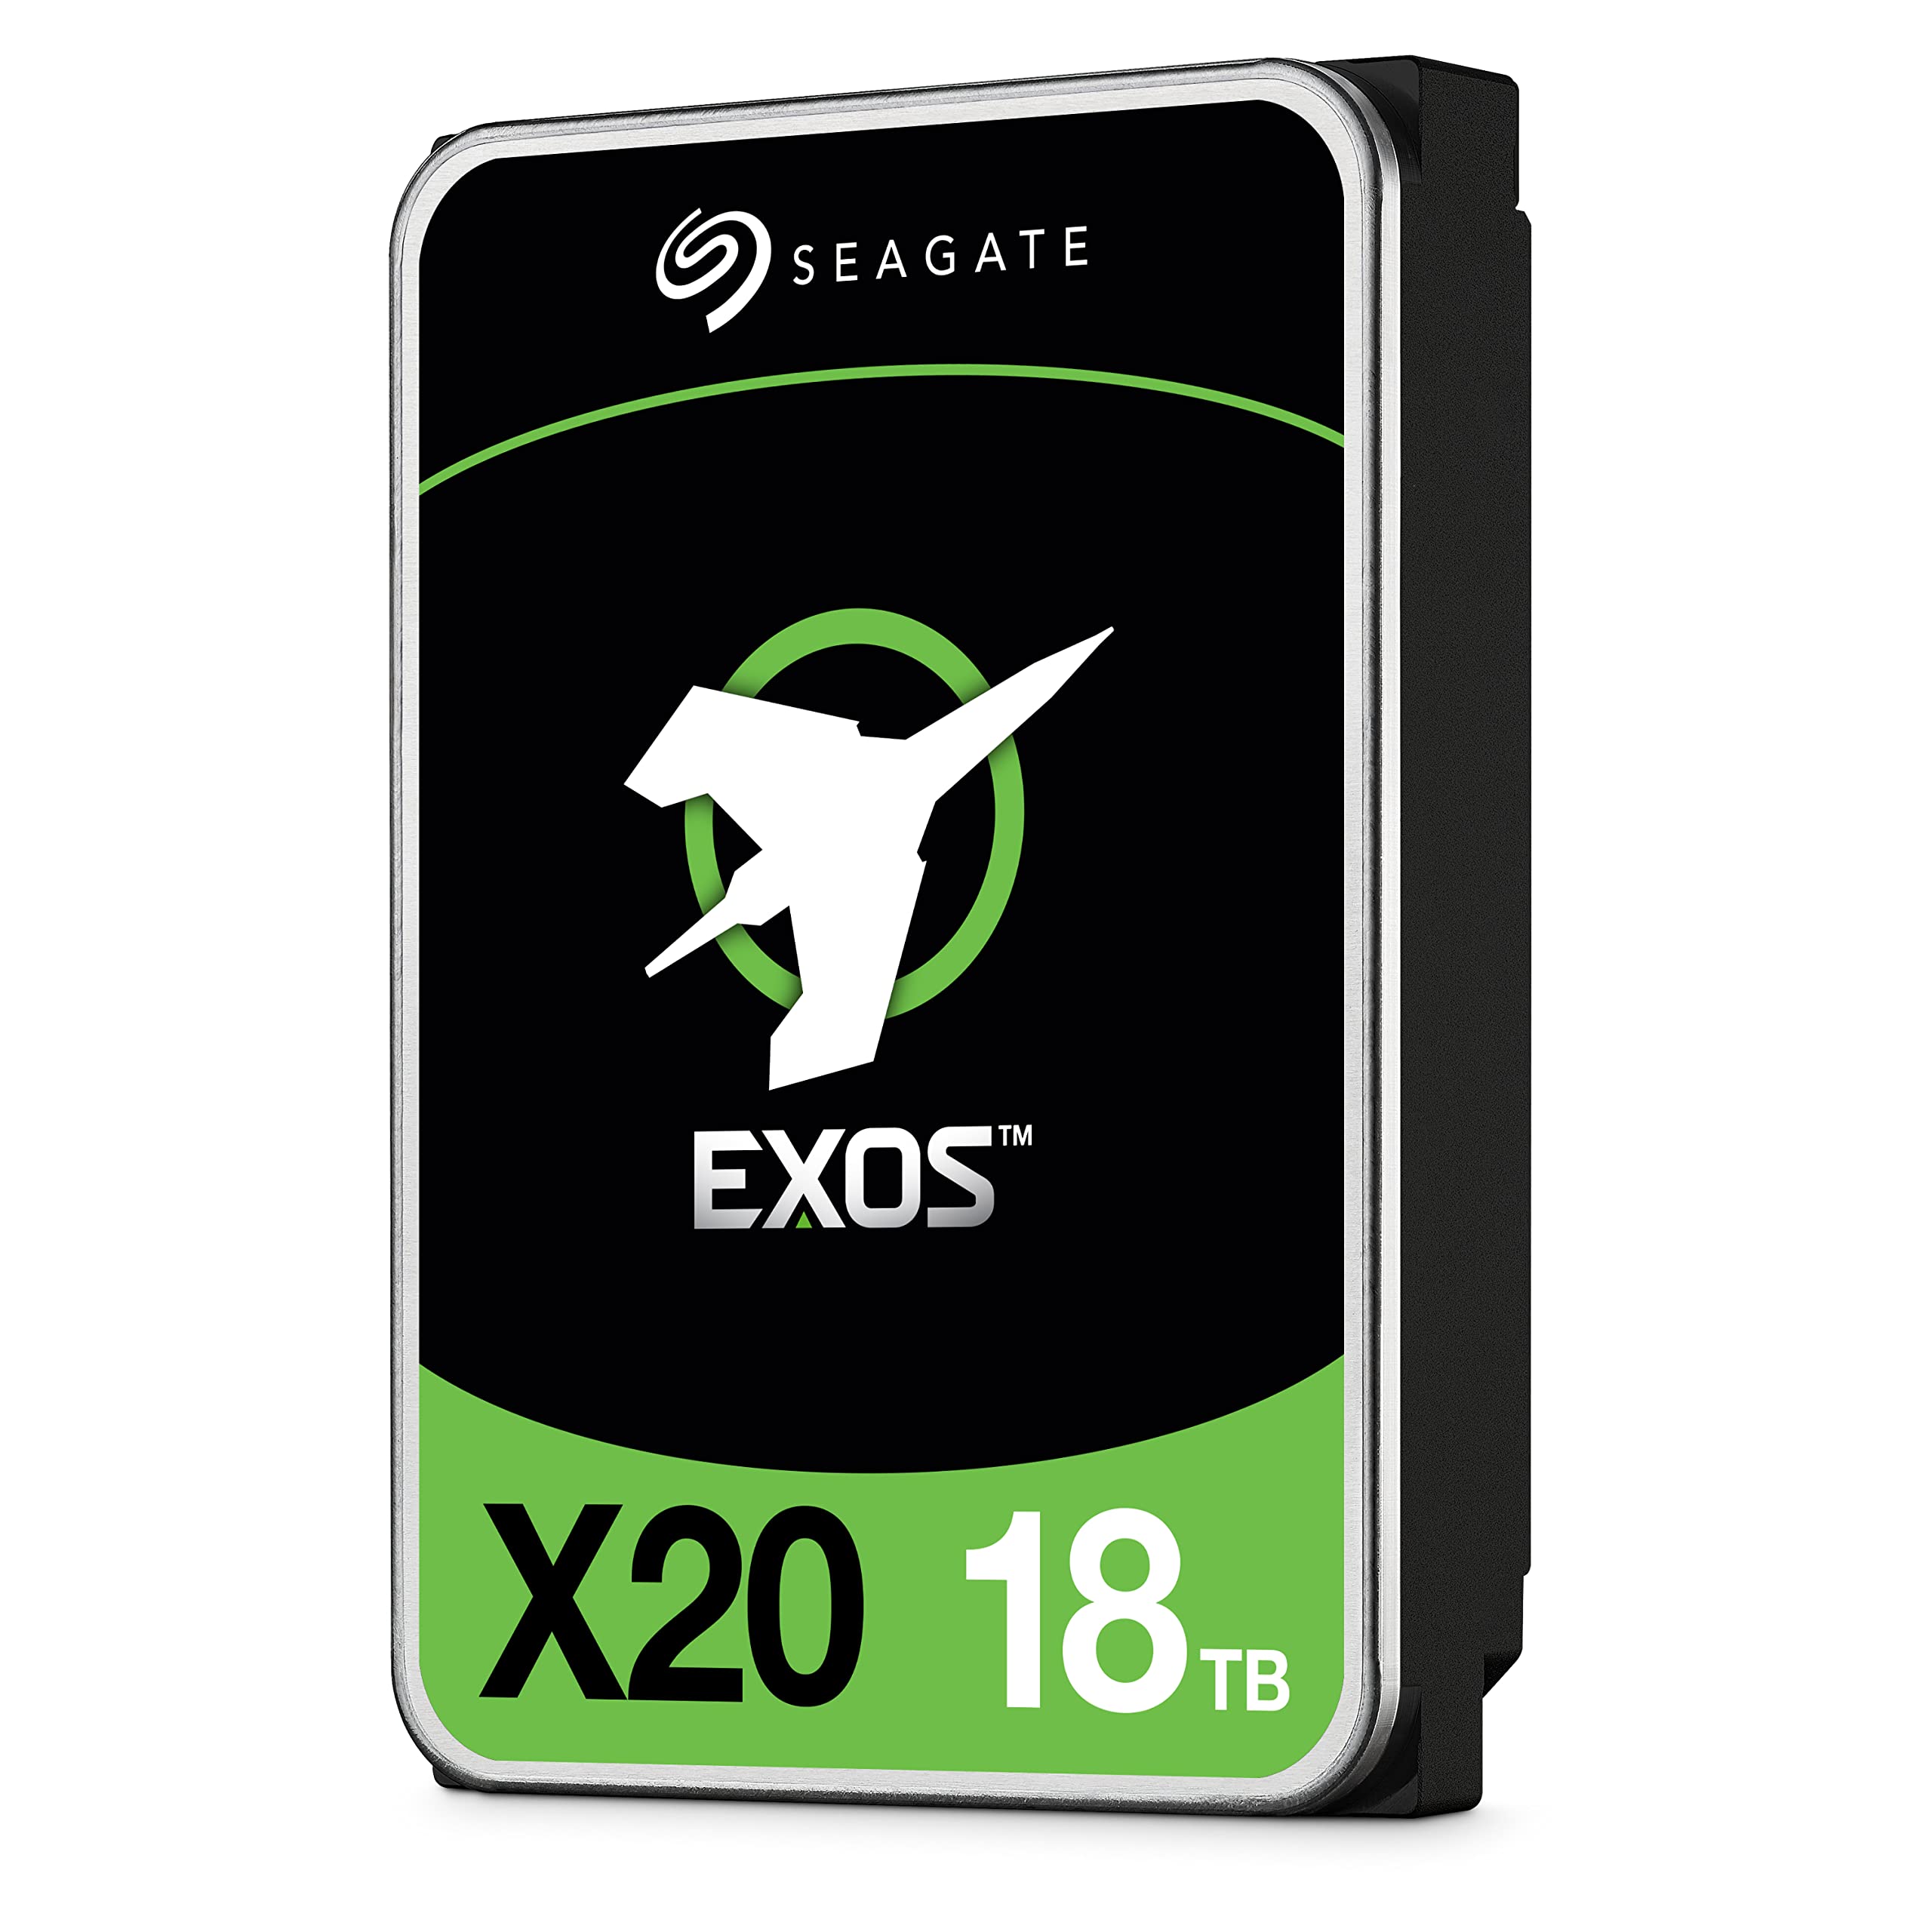 SEAGATE - ビジネスクリティカルSATA EXOS X20 18TB SAS 3.5インチ 7200RPM 6GBS 512E4K